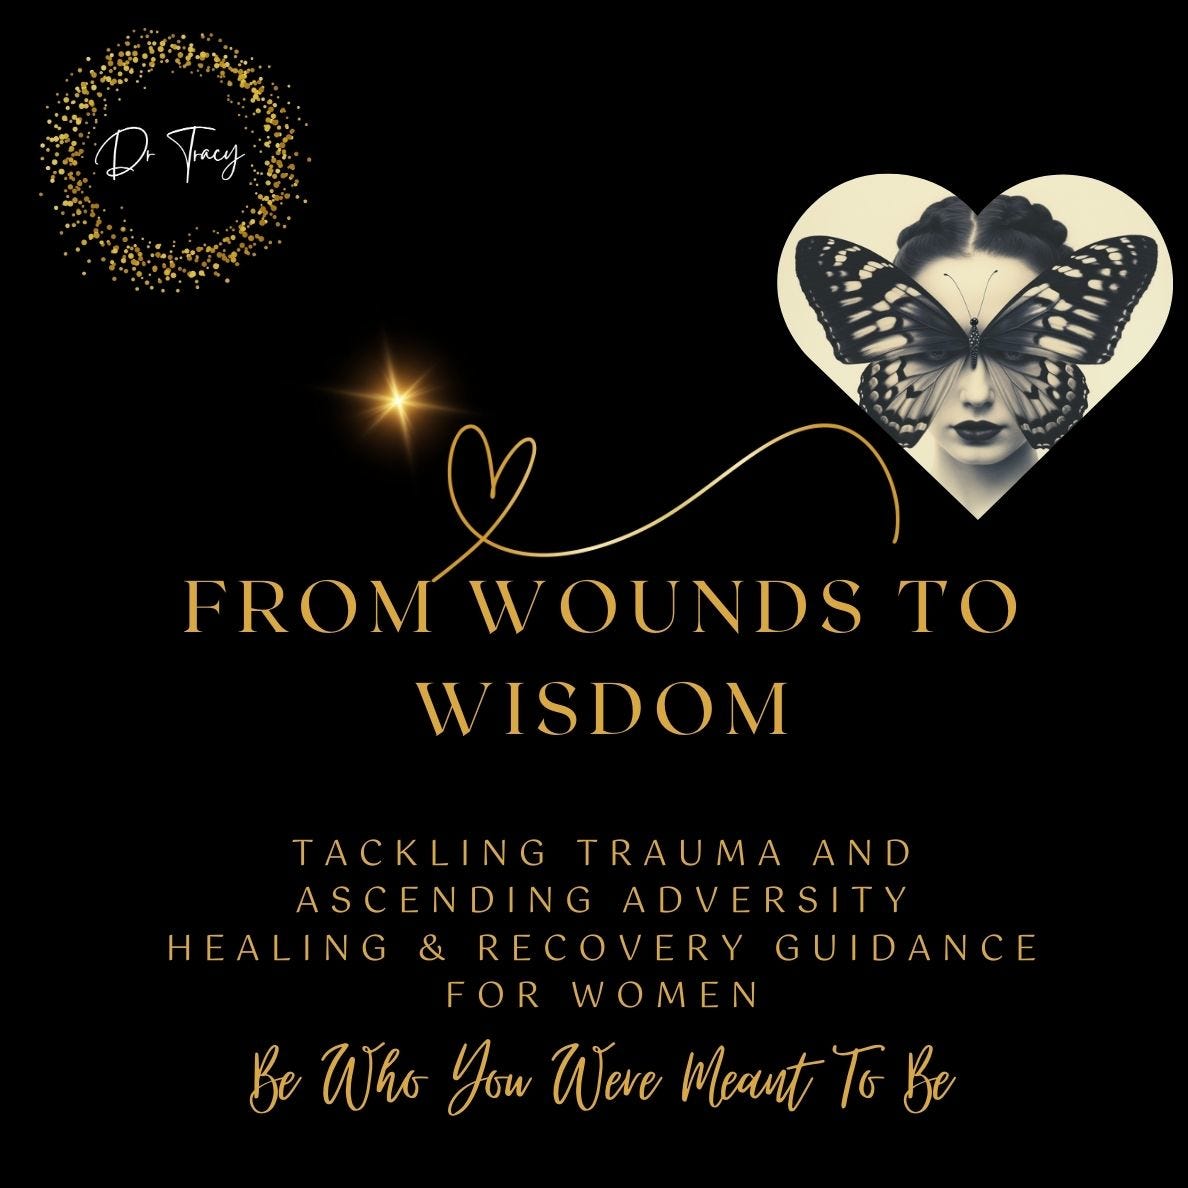 Wounds to Wisdom